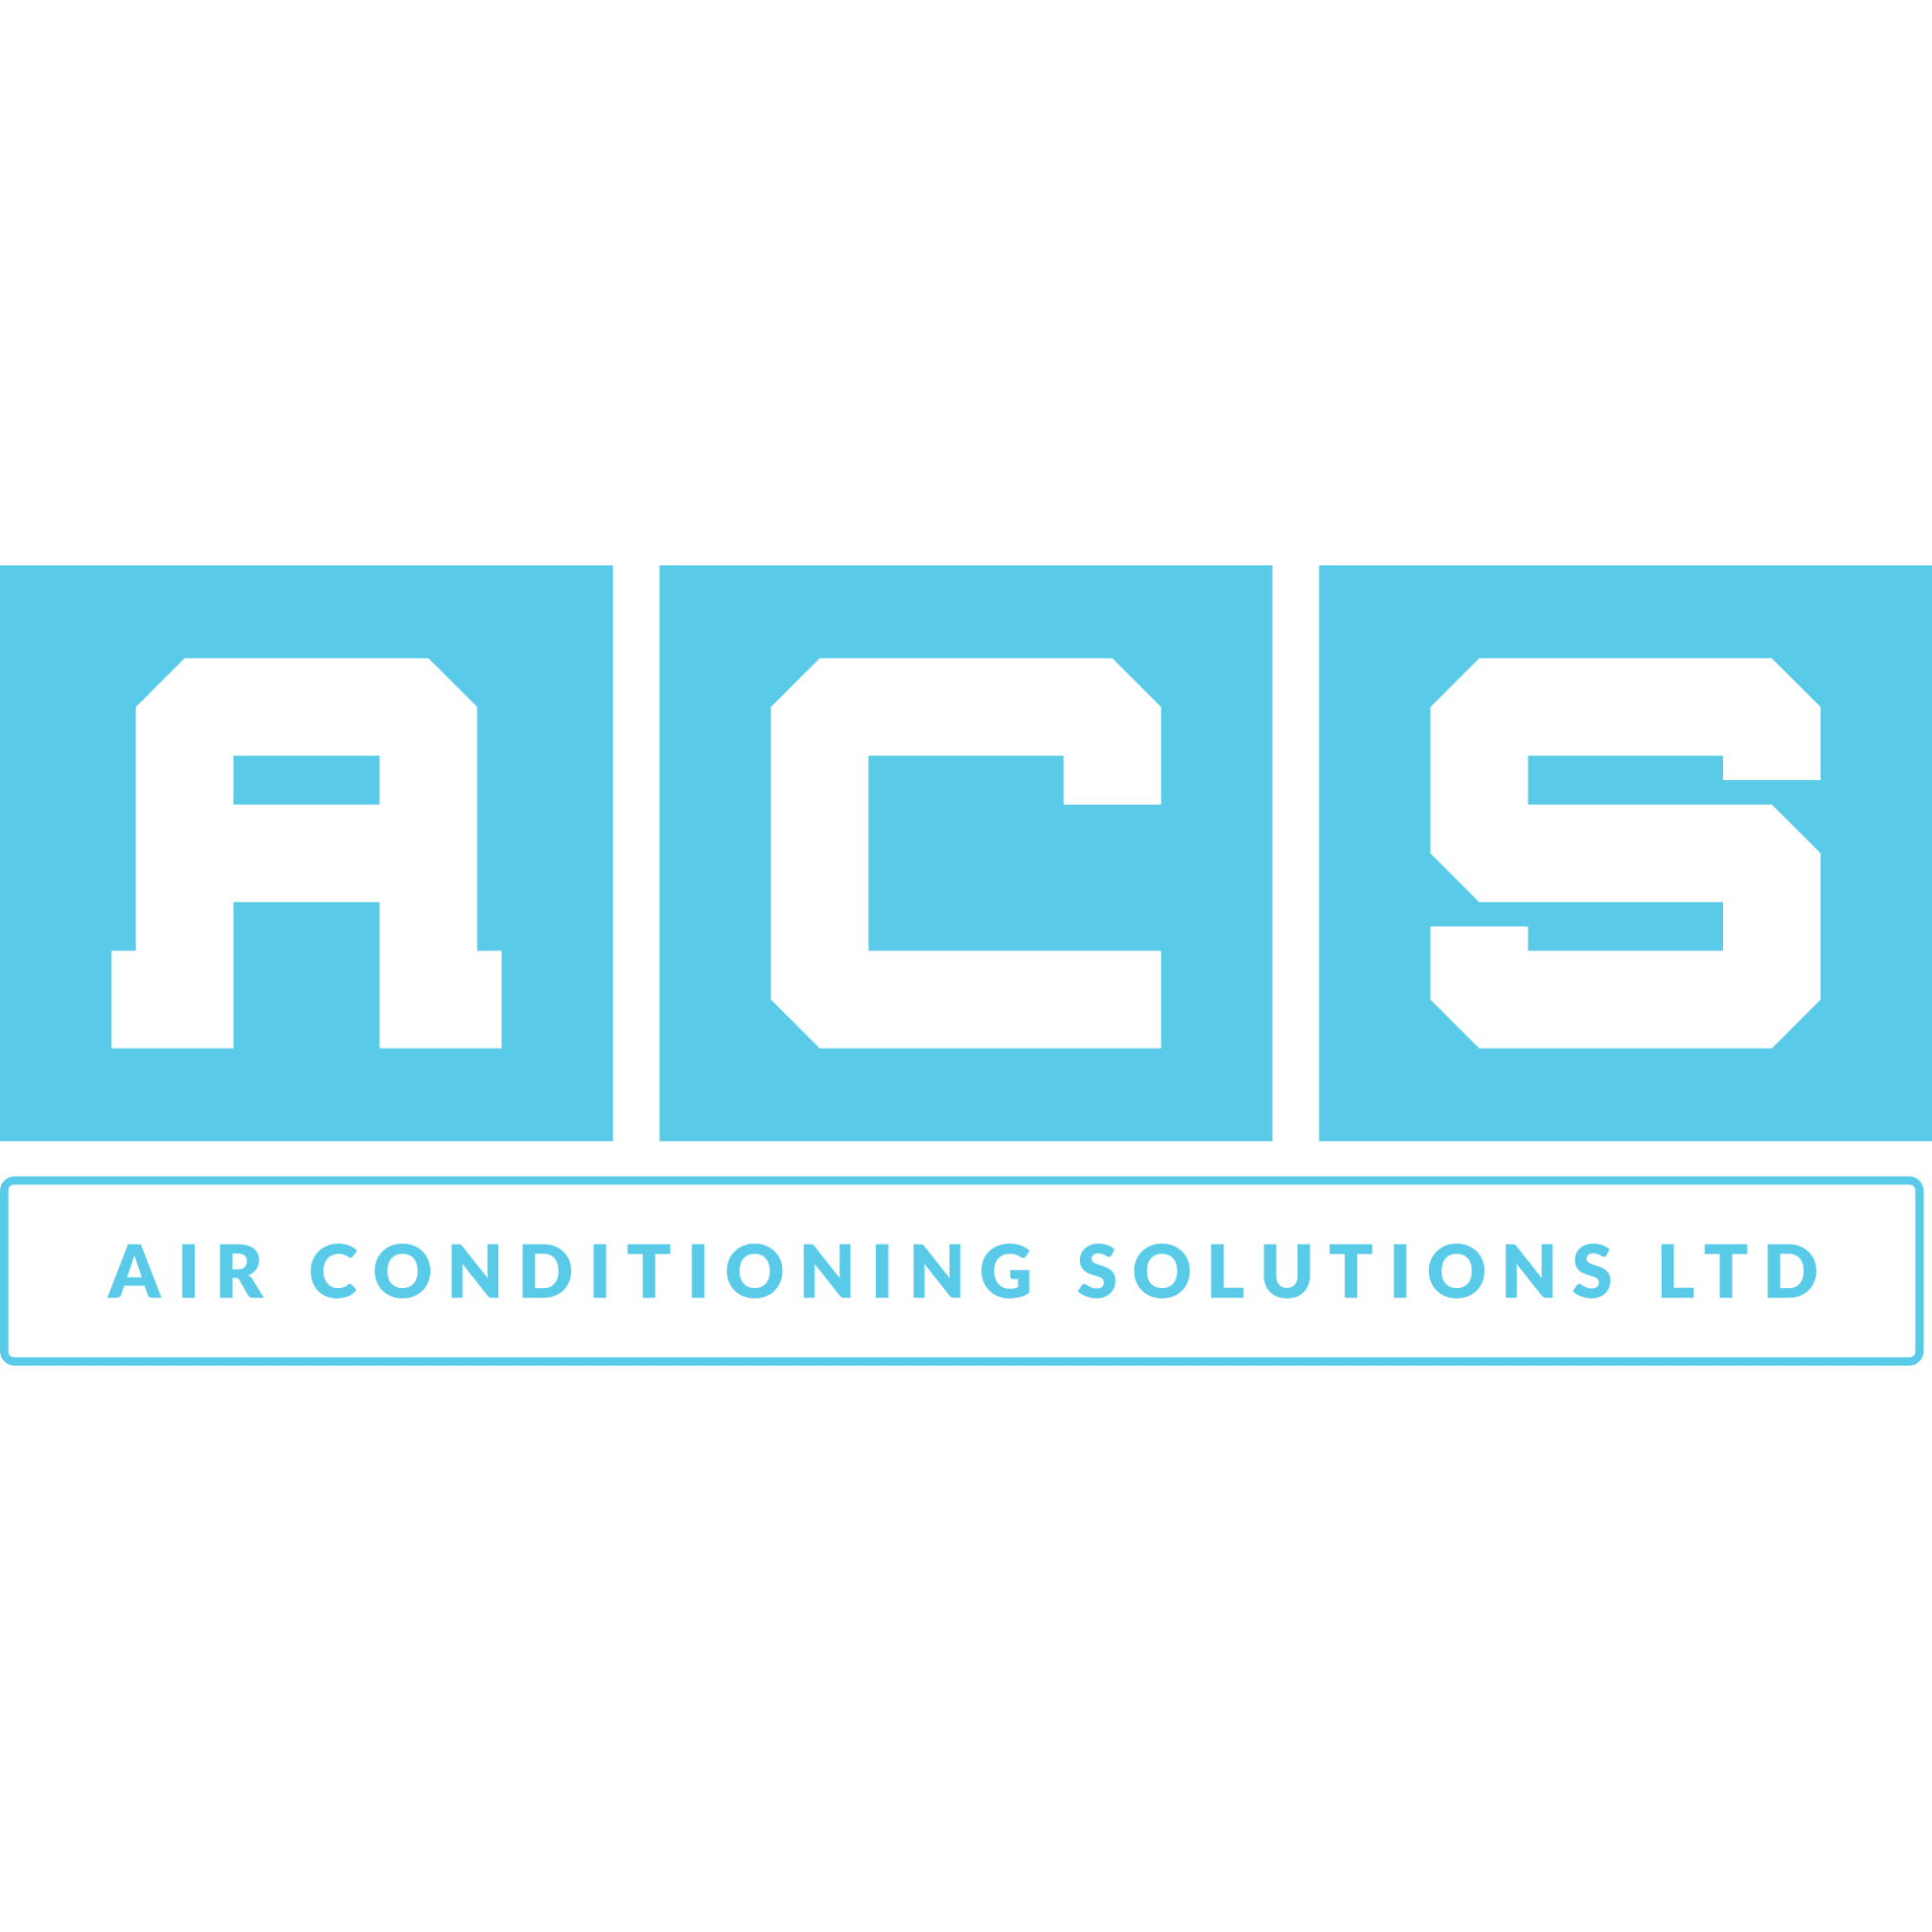 Air Conditioning Solutions Ltd - Bolton, Lancashire BL7 9BA - 01612 412385 | ShowMeLocal.com